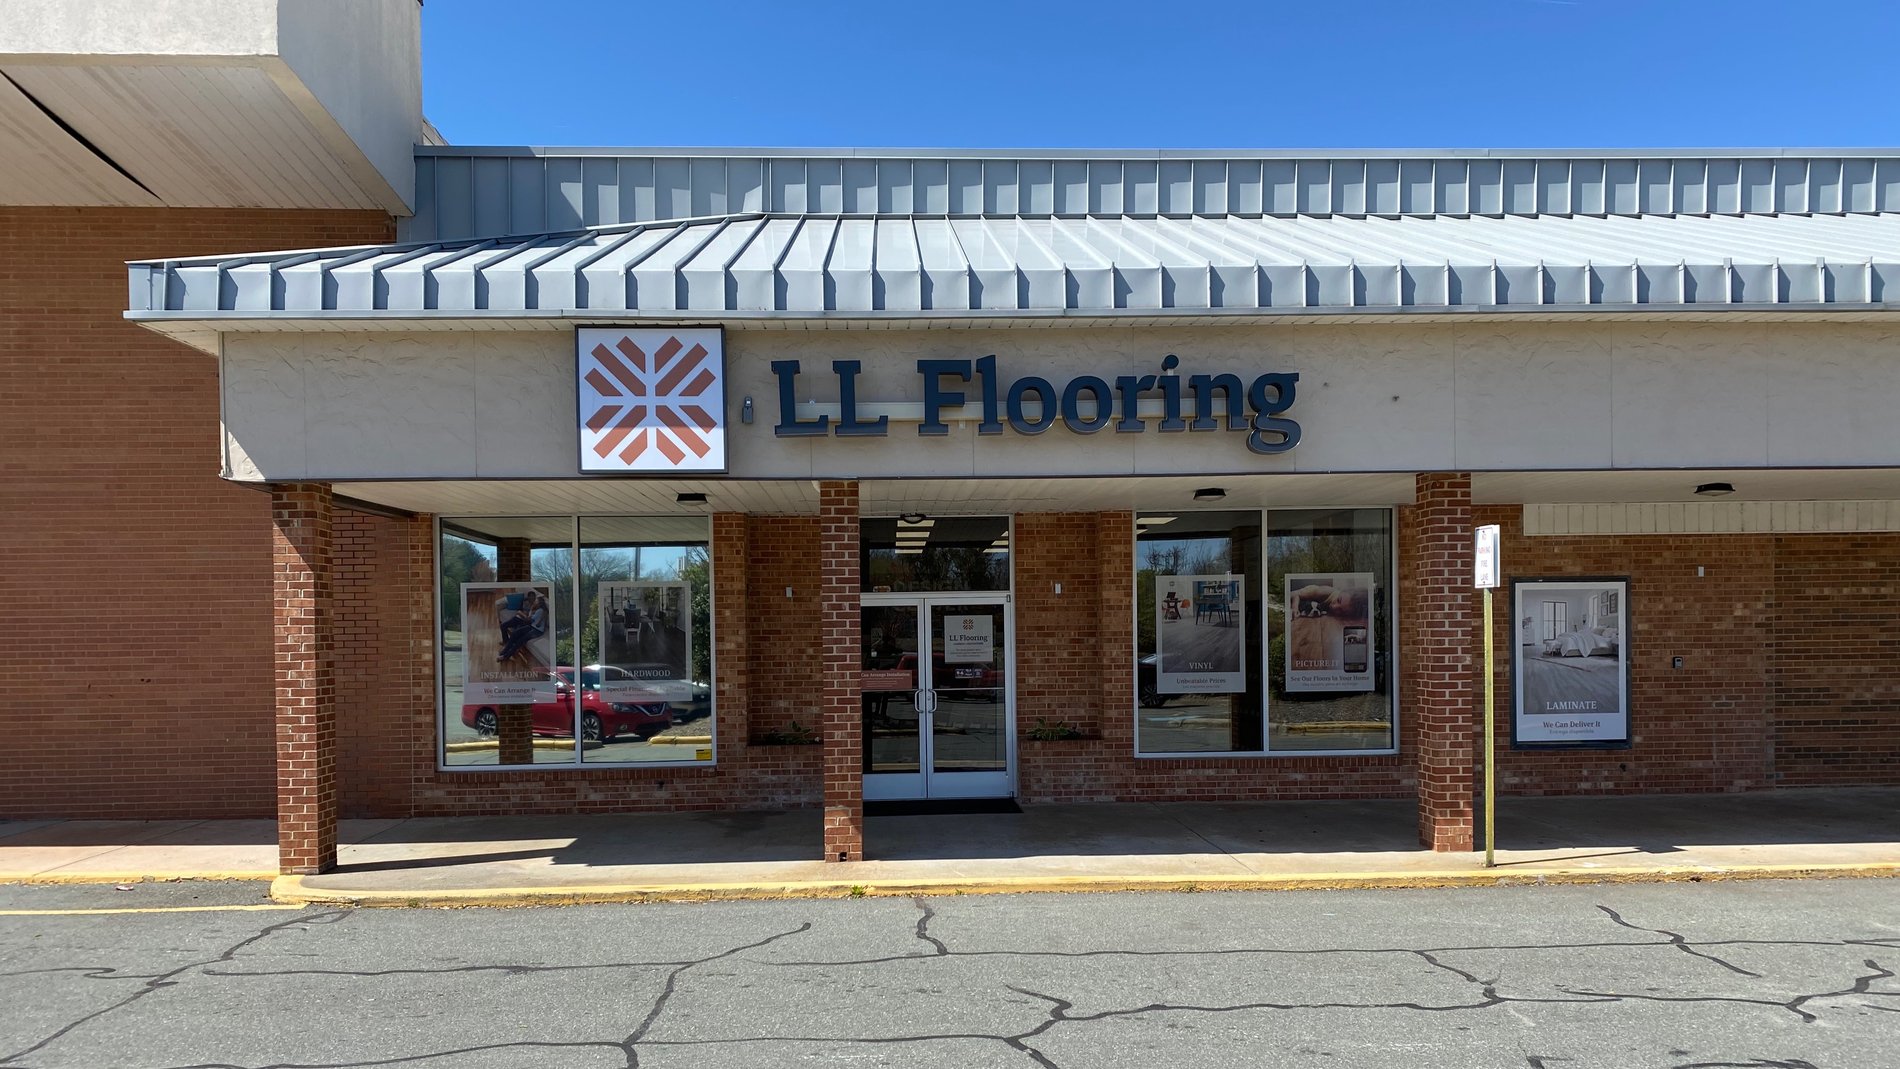 LL Flooring #1449 Burlington | 1809 S. Church St. | Storefront